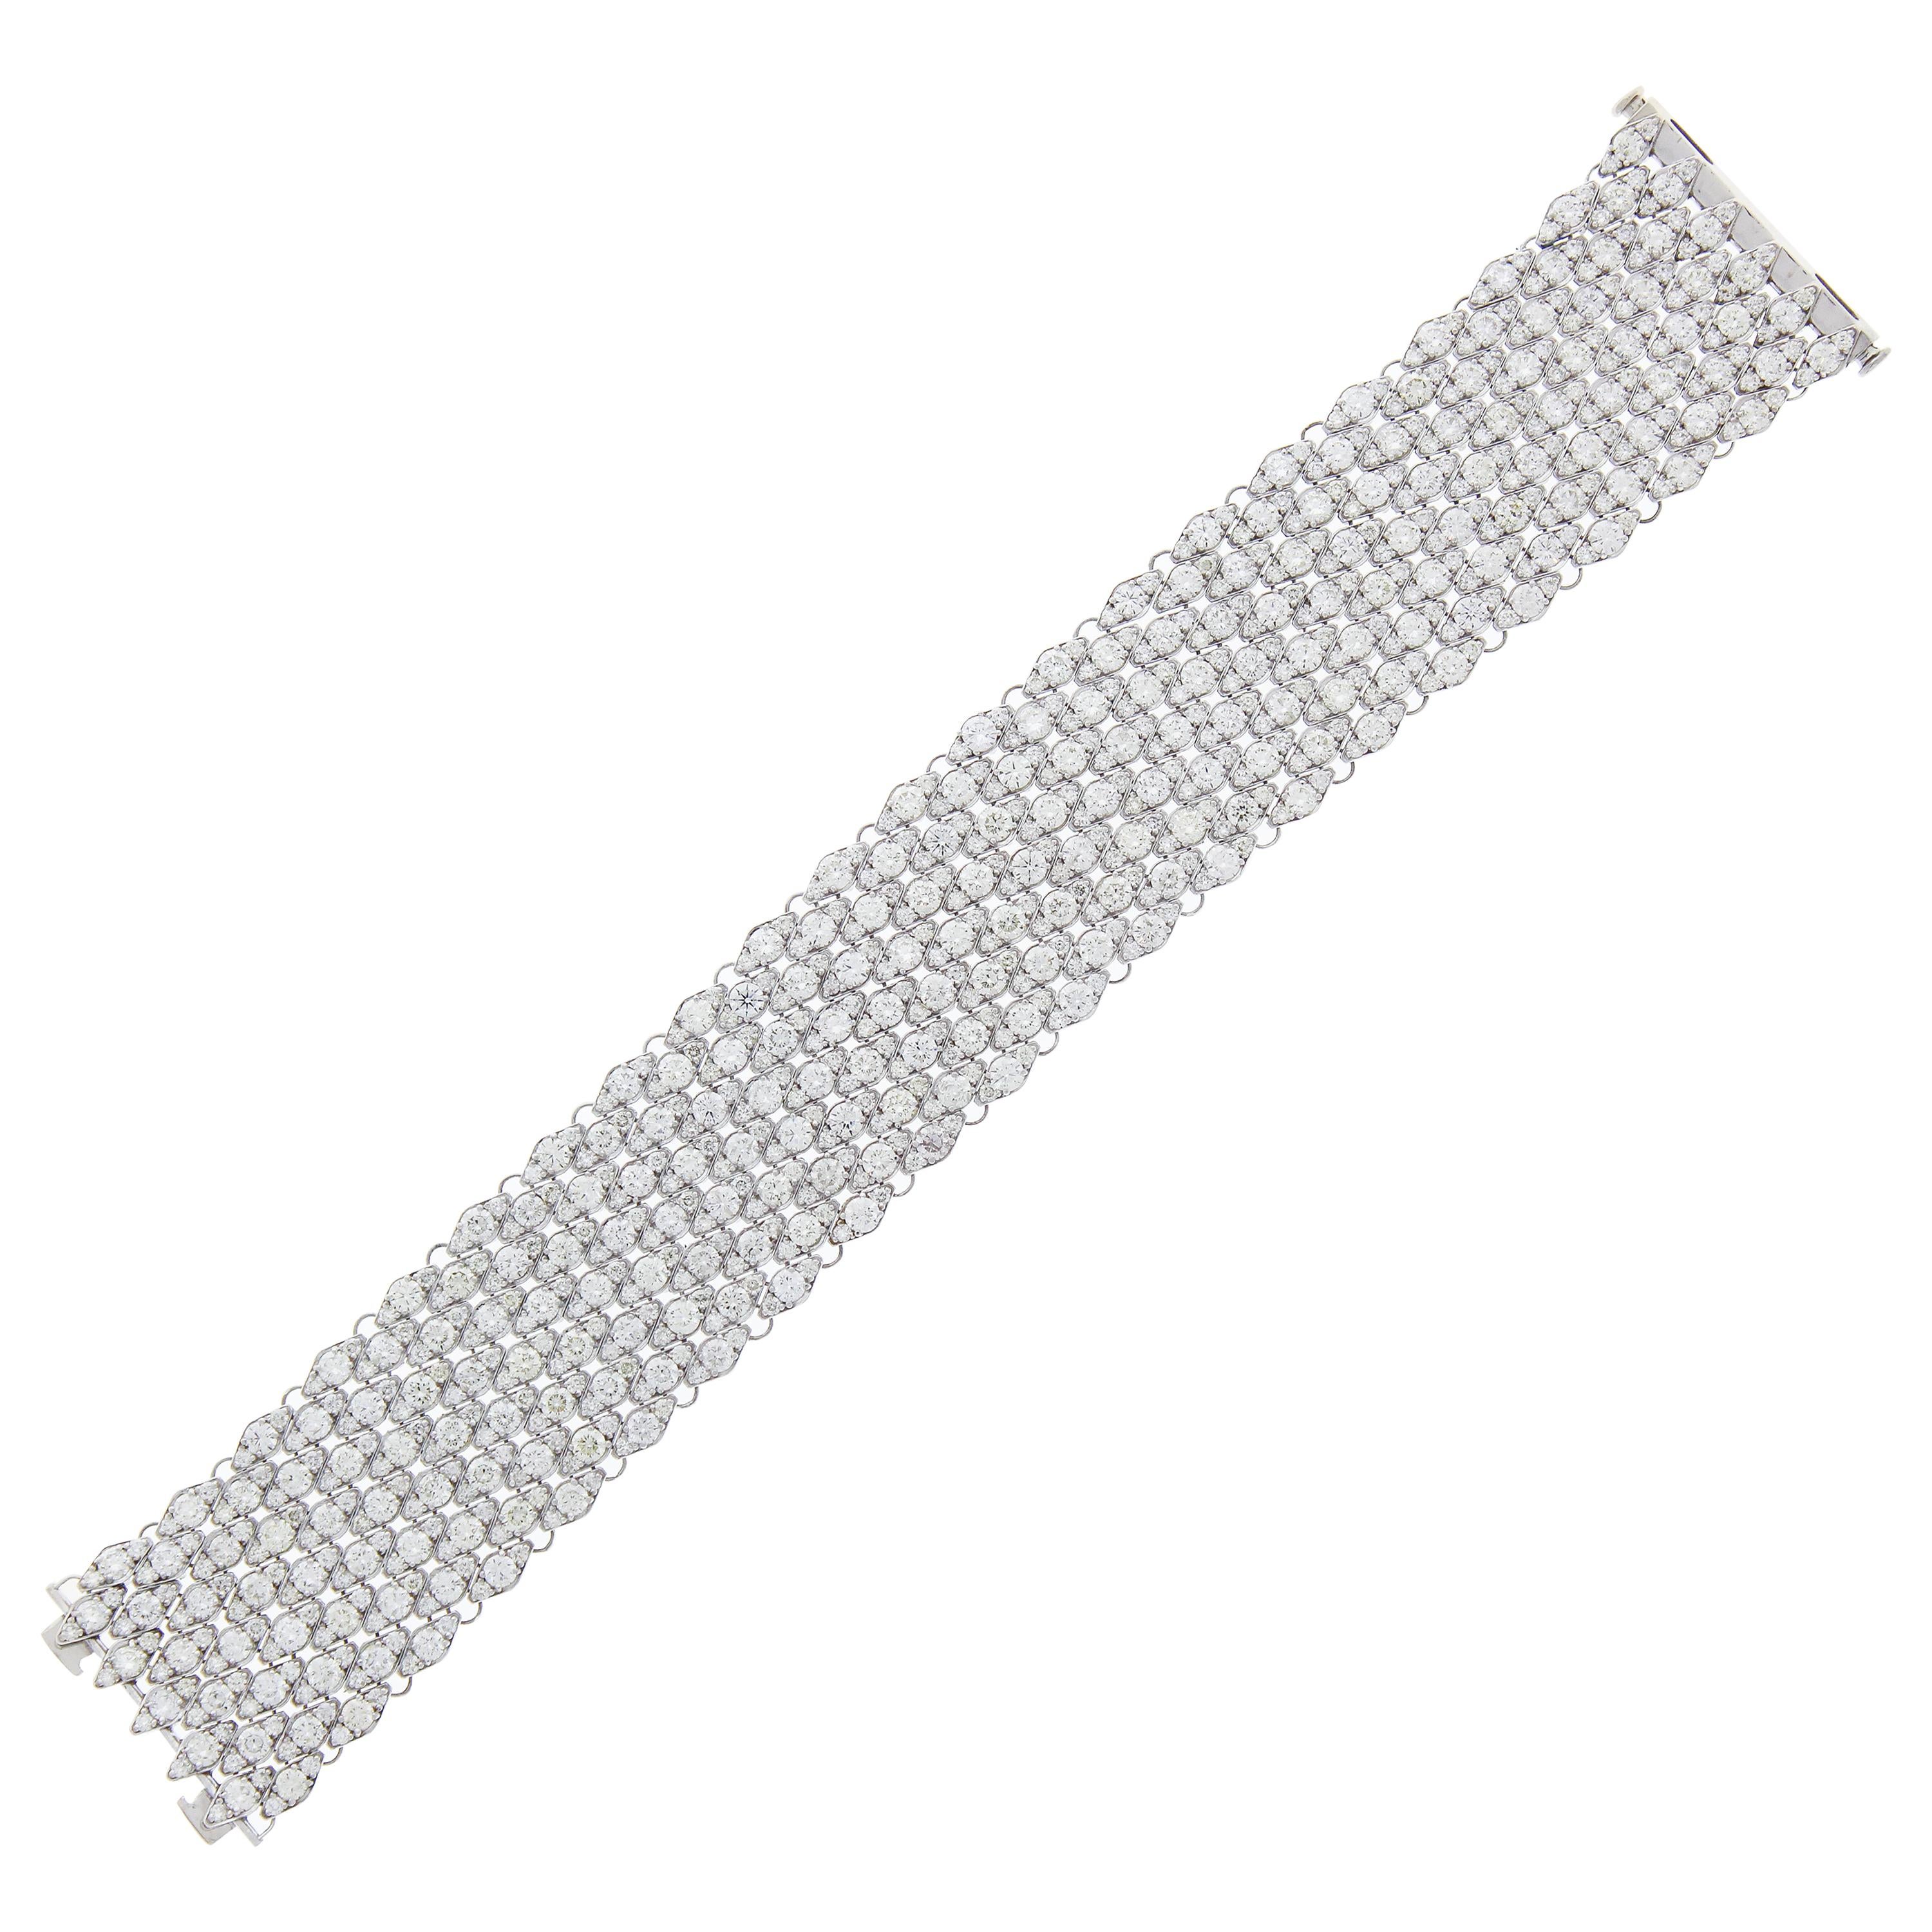 24.05 Carat Brilliant Cut Diamond Bracelet in 14k White Gold